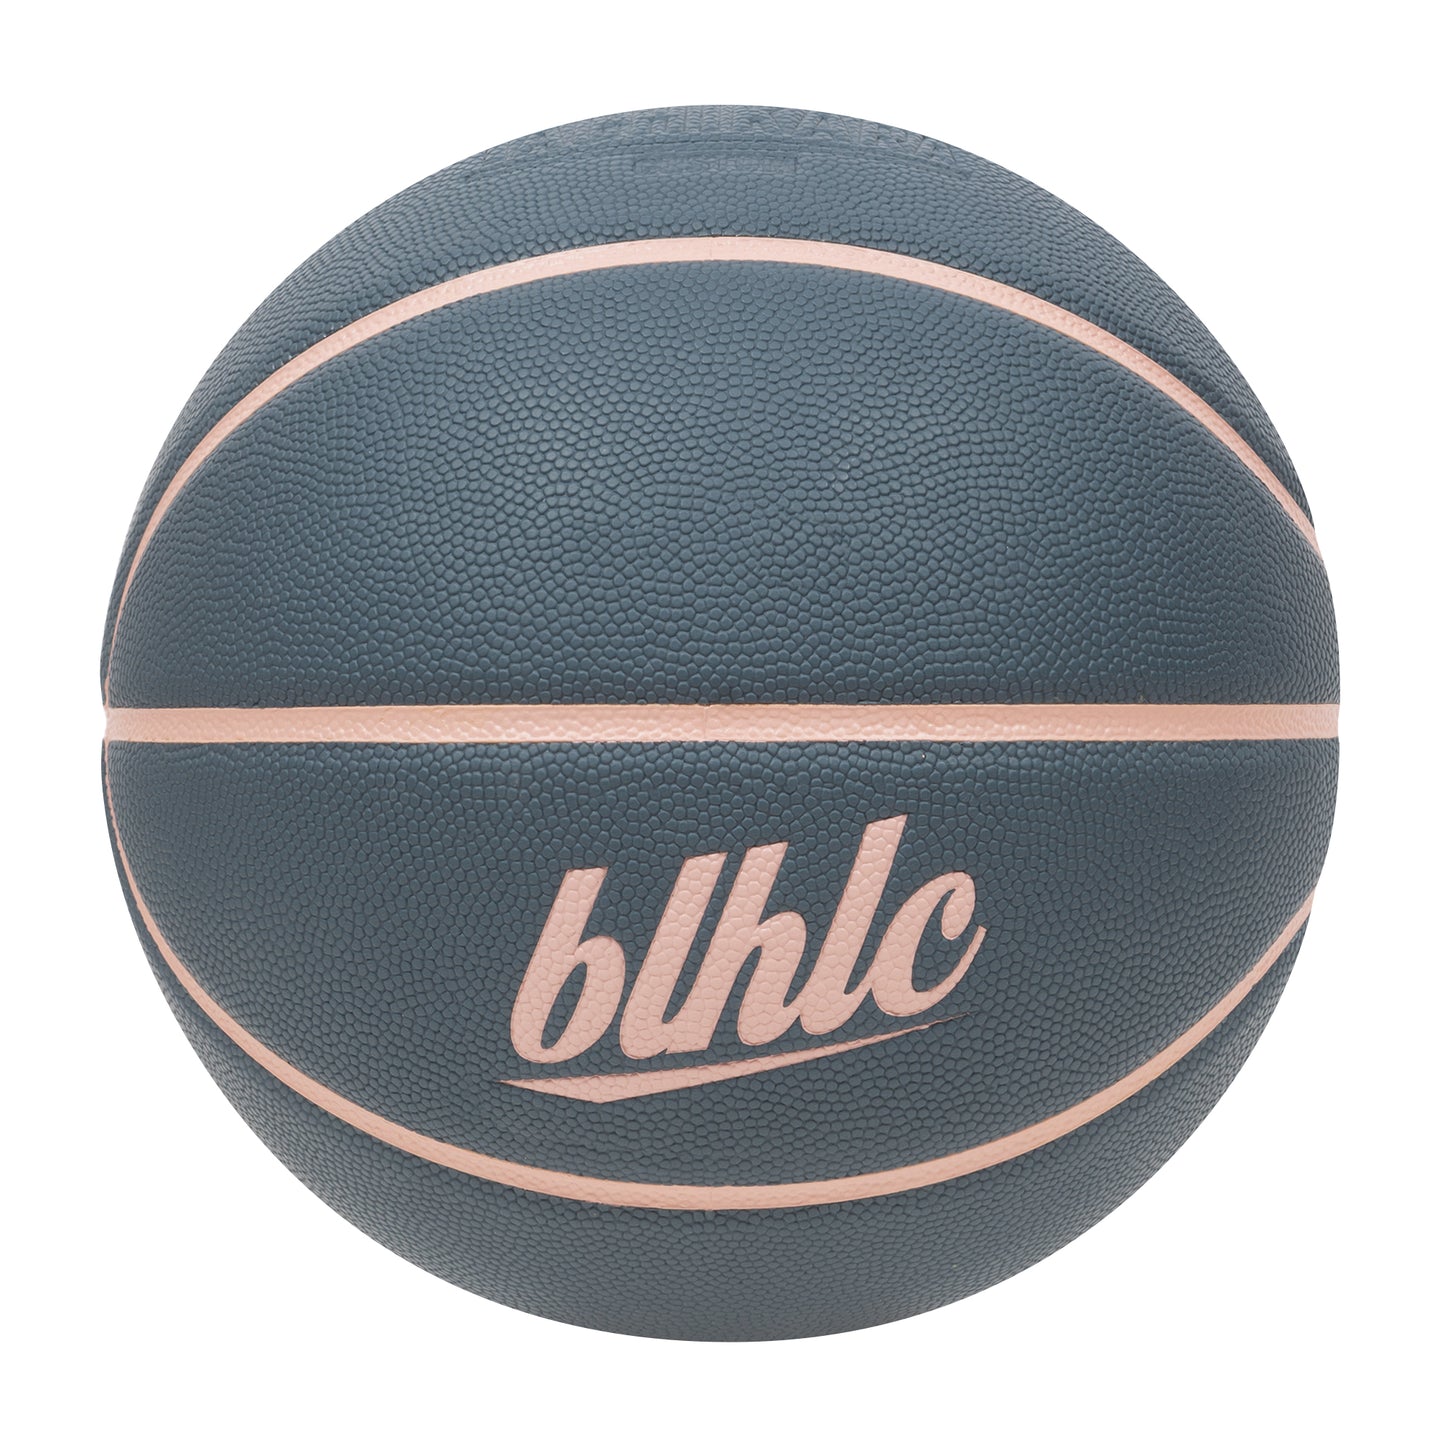 Playground Basketball / ballaholic x TACHIKARA (slate blue/pink) 7